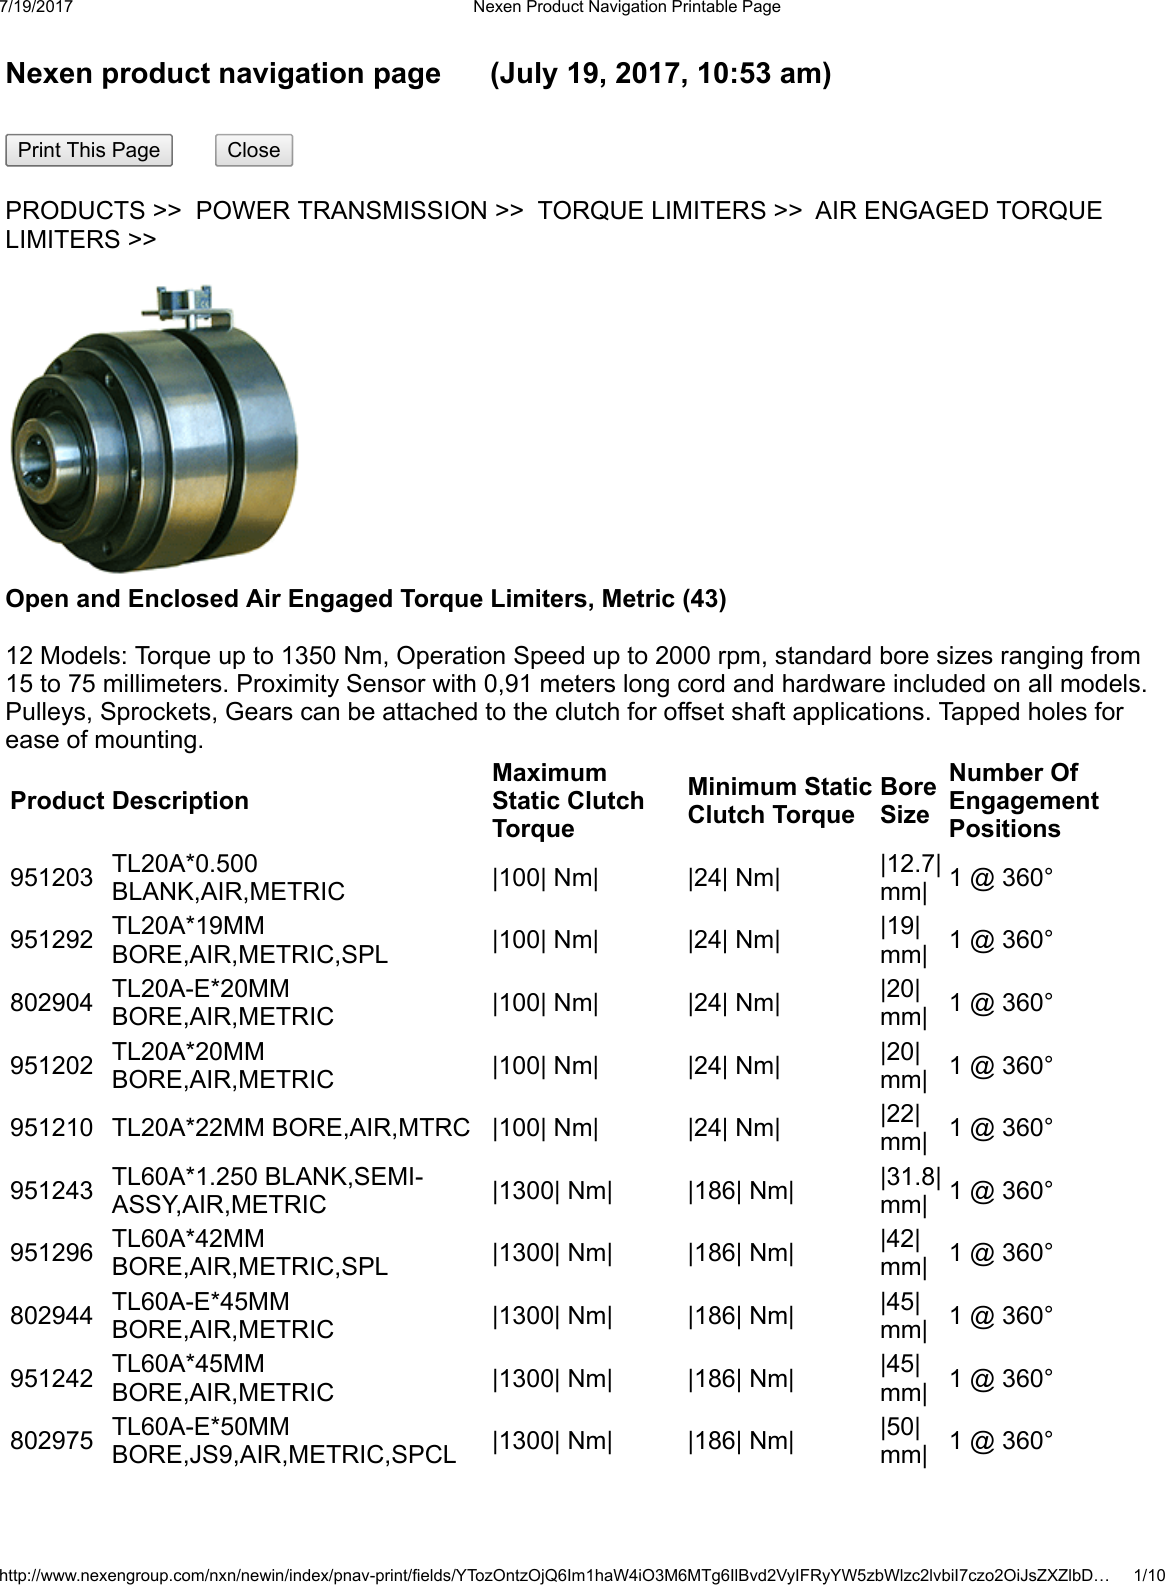 Nexen 802968 Enclosed Air Engaged Torque Limiter 